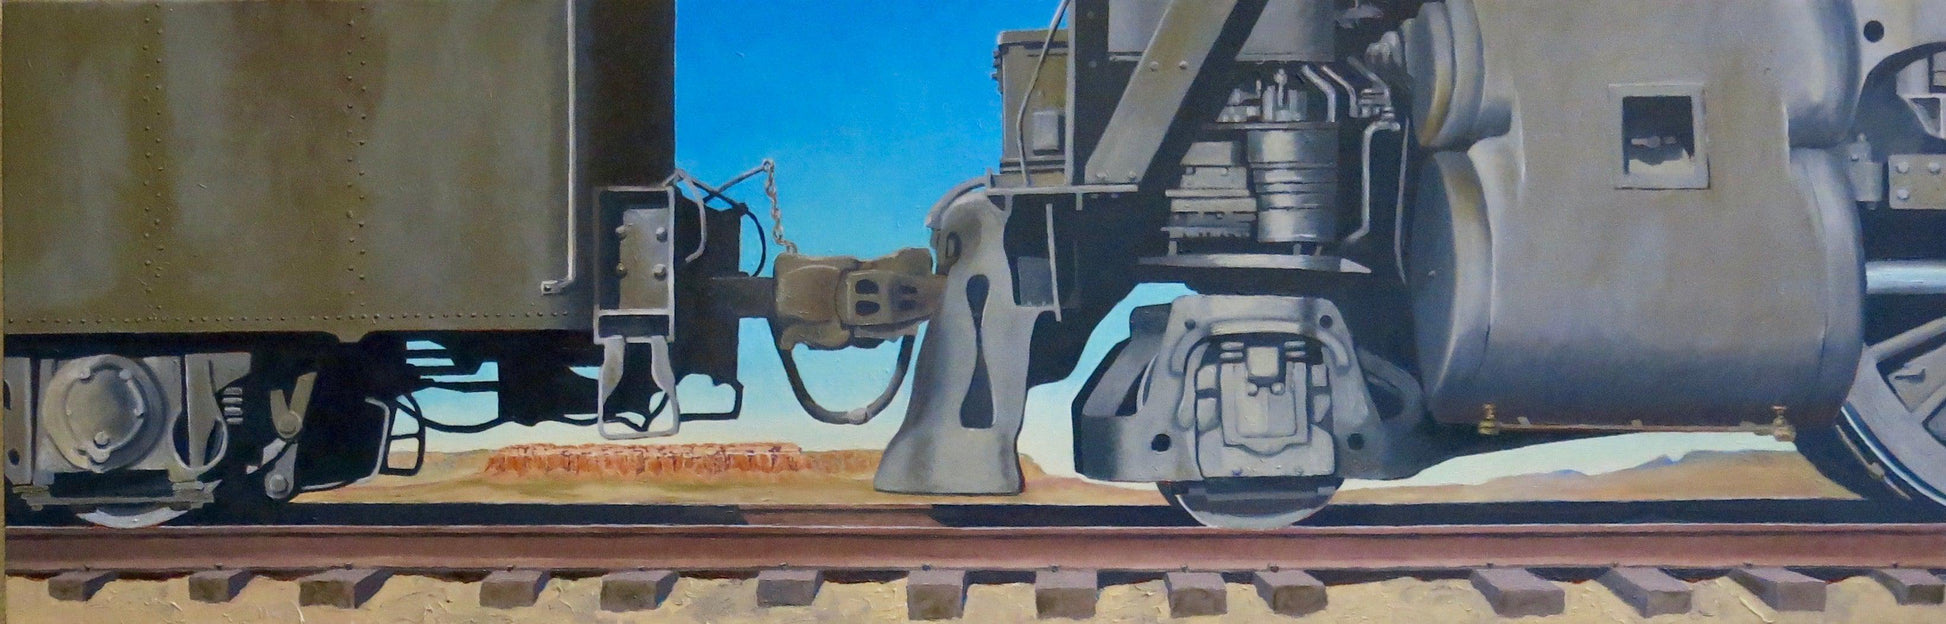 Trackside View-Painting-David Knowlton-Sorrel Sky Gallery